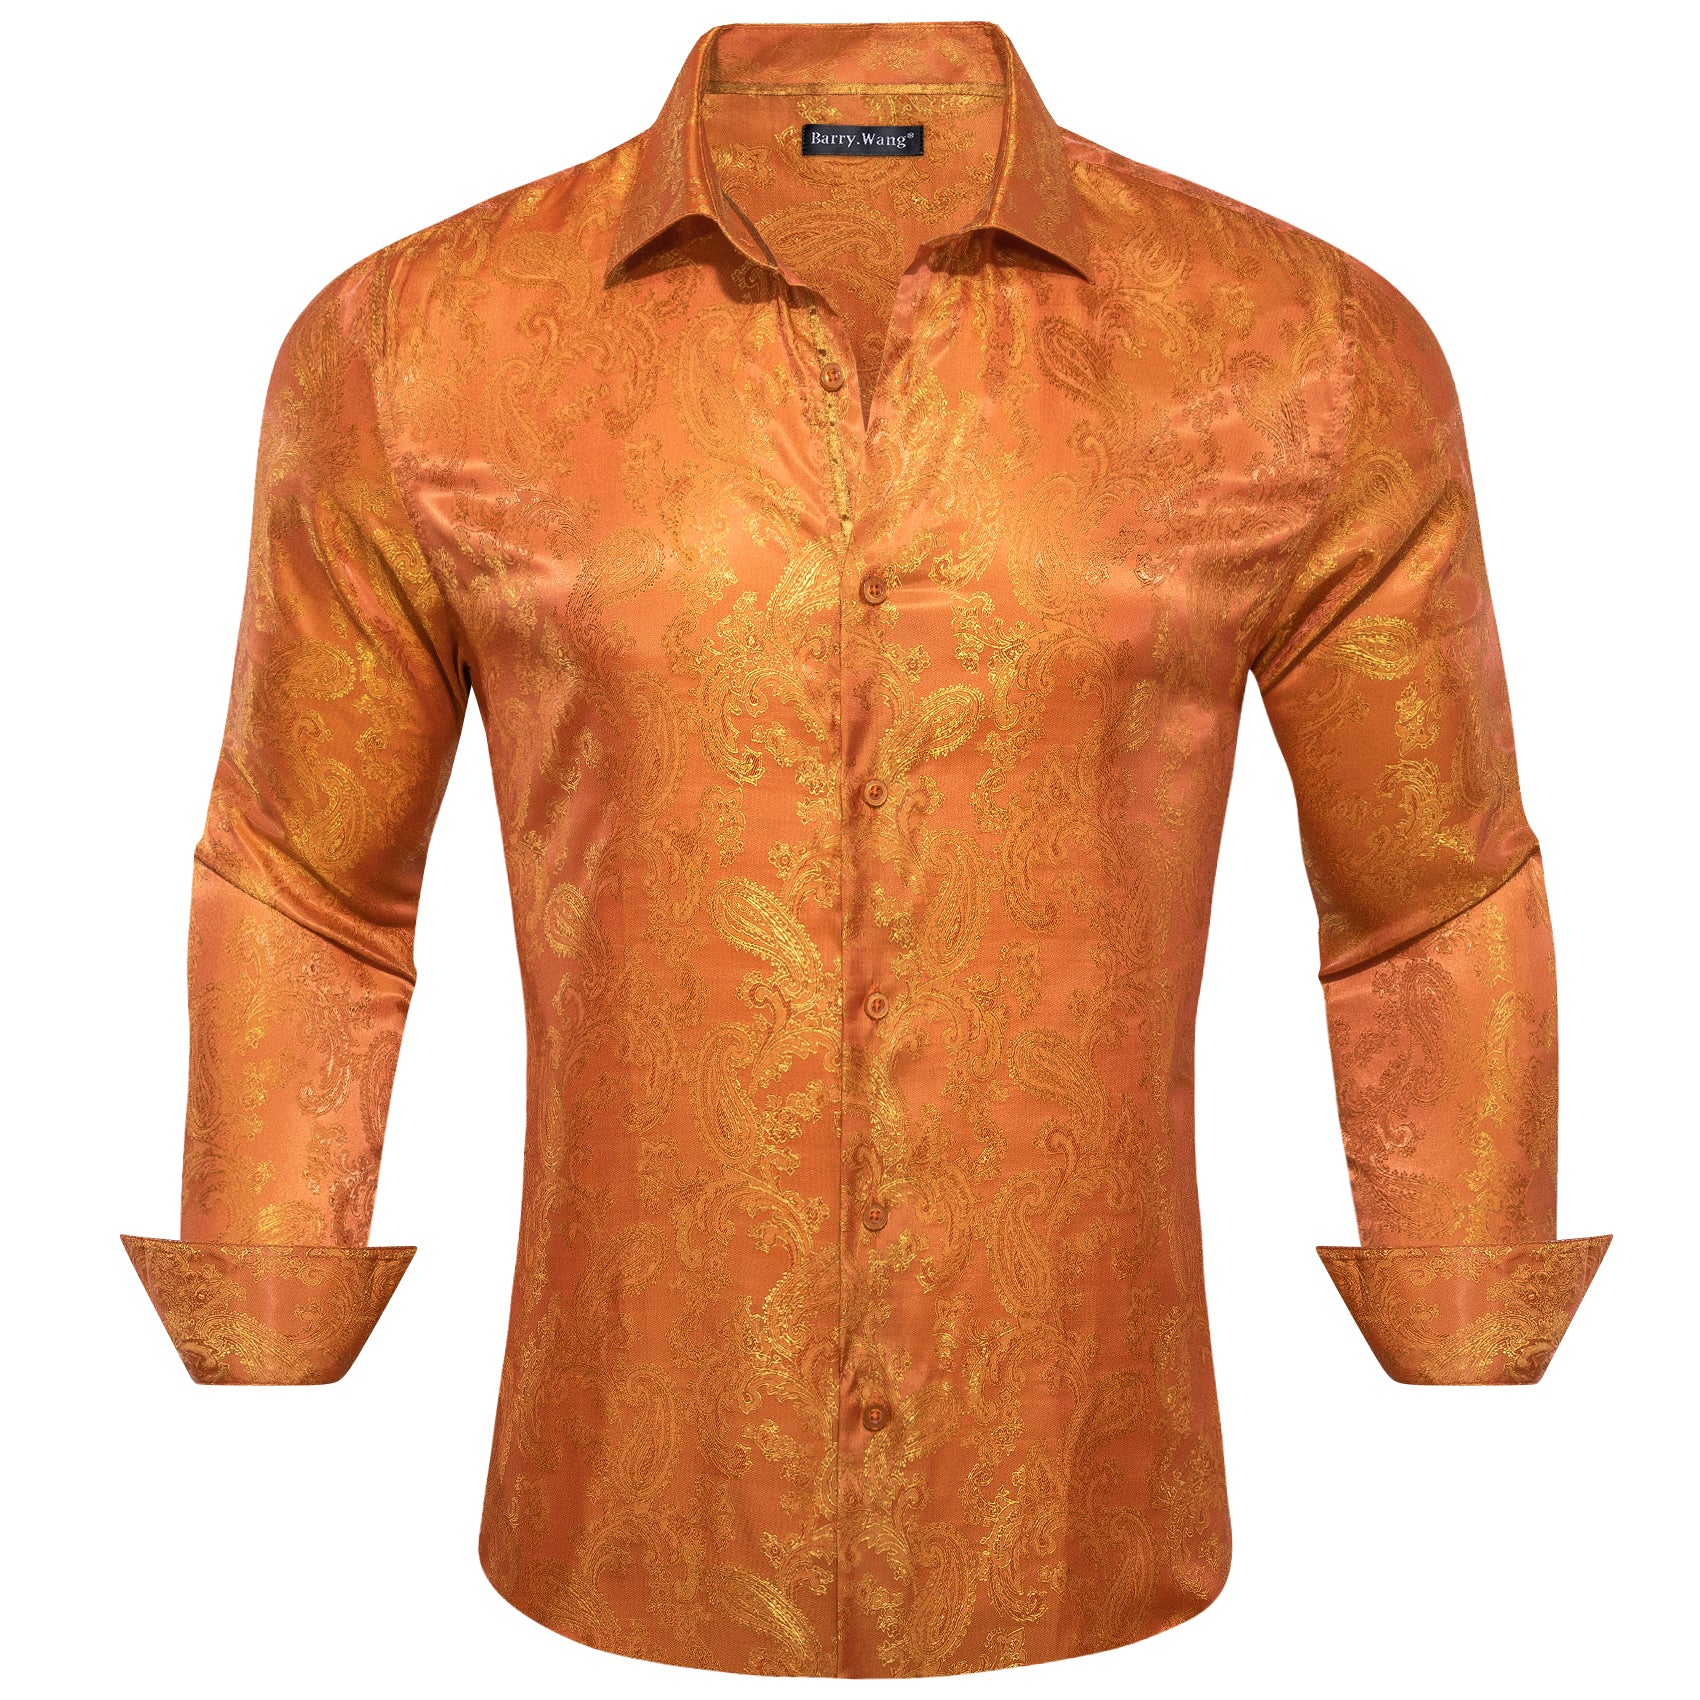 Barry.wang Long Sleeve Shirt Orange Paisley Silk Shirt for Men